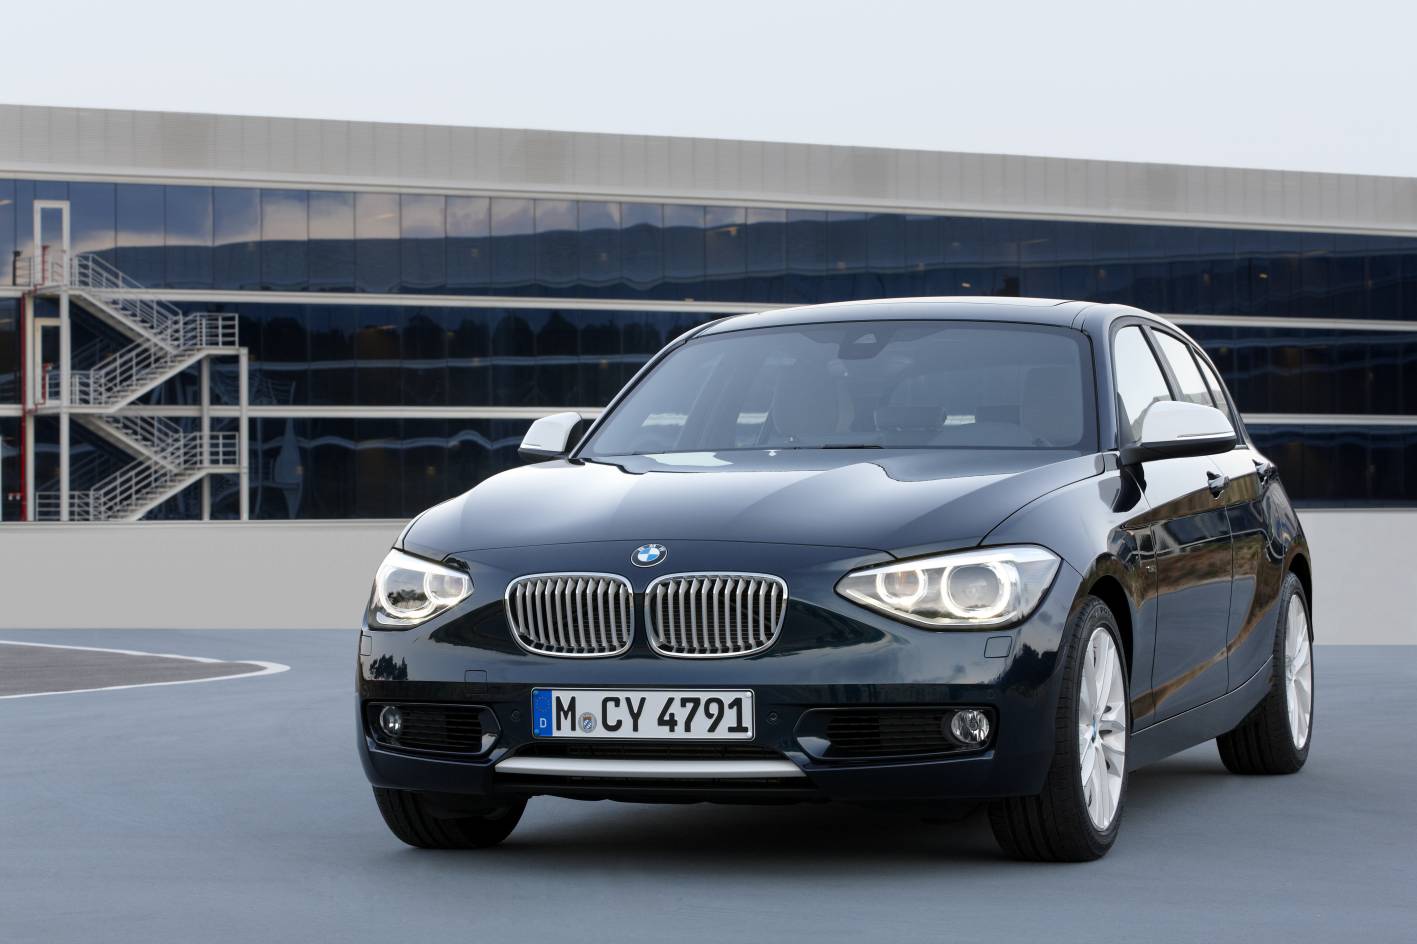 BMW 116i 2012 Review